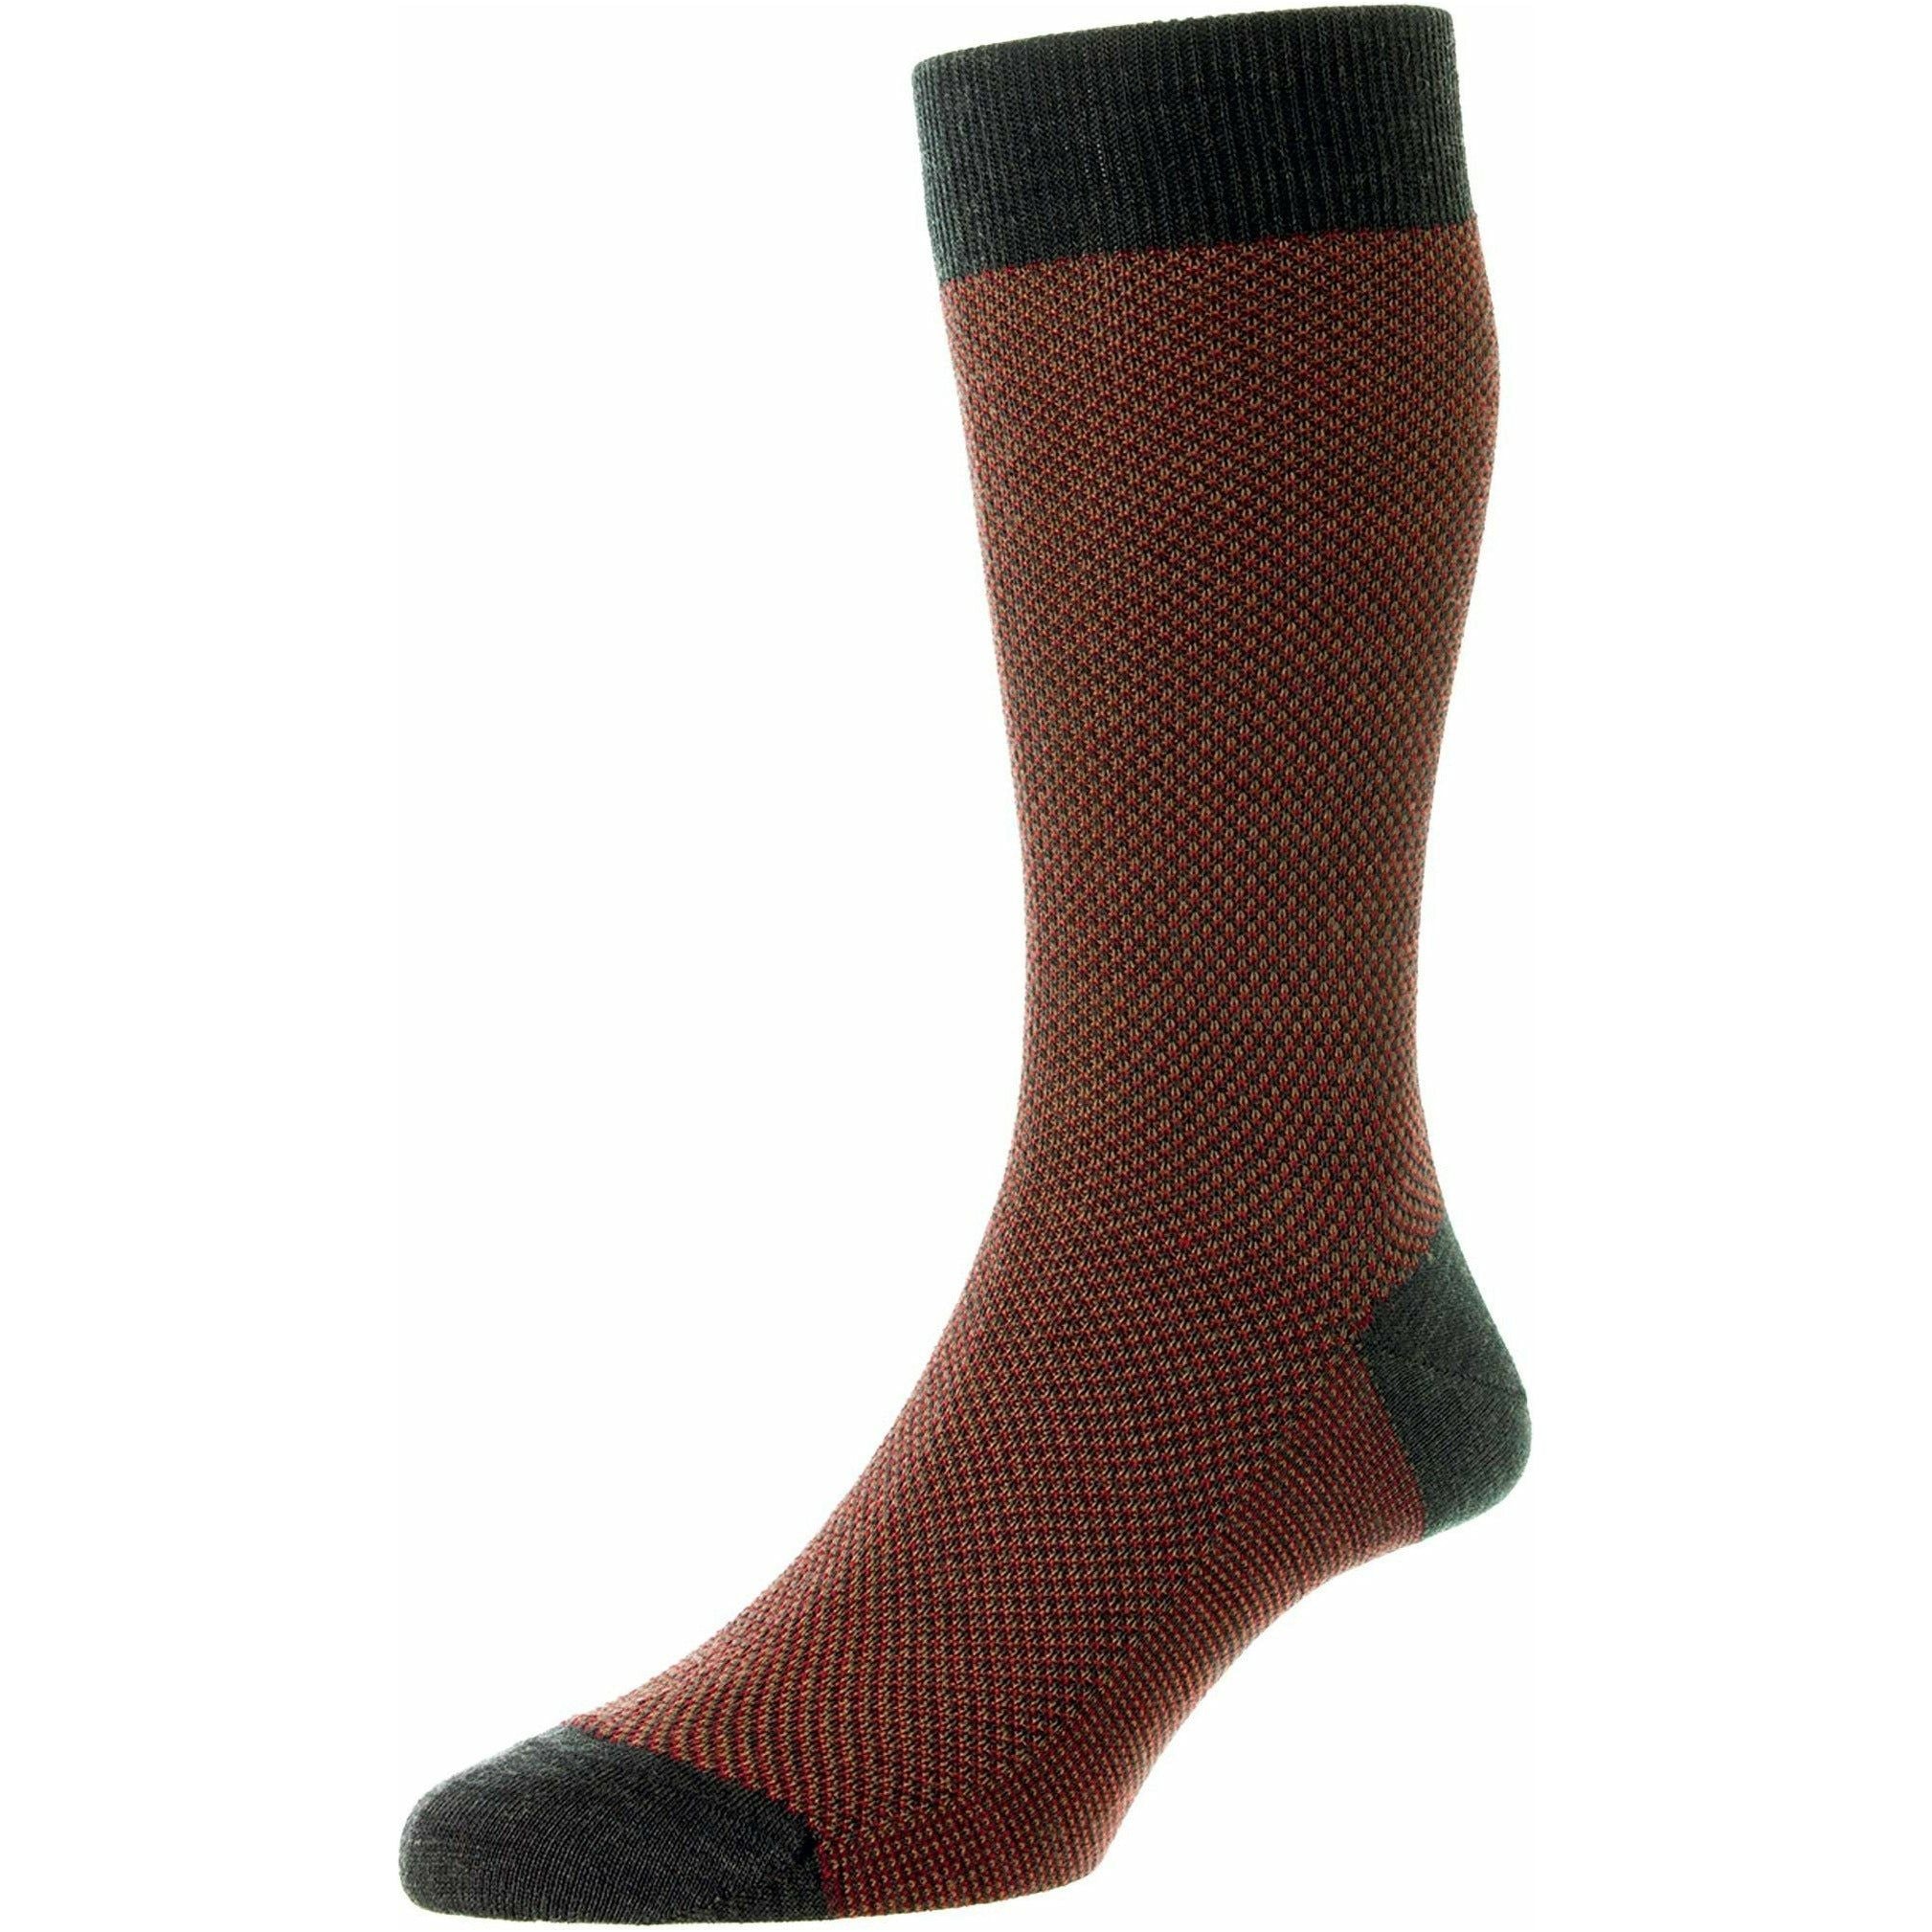 Blenheim 3-Color Birdseye Merino Wool Socks